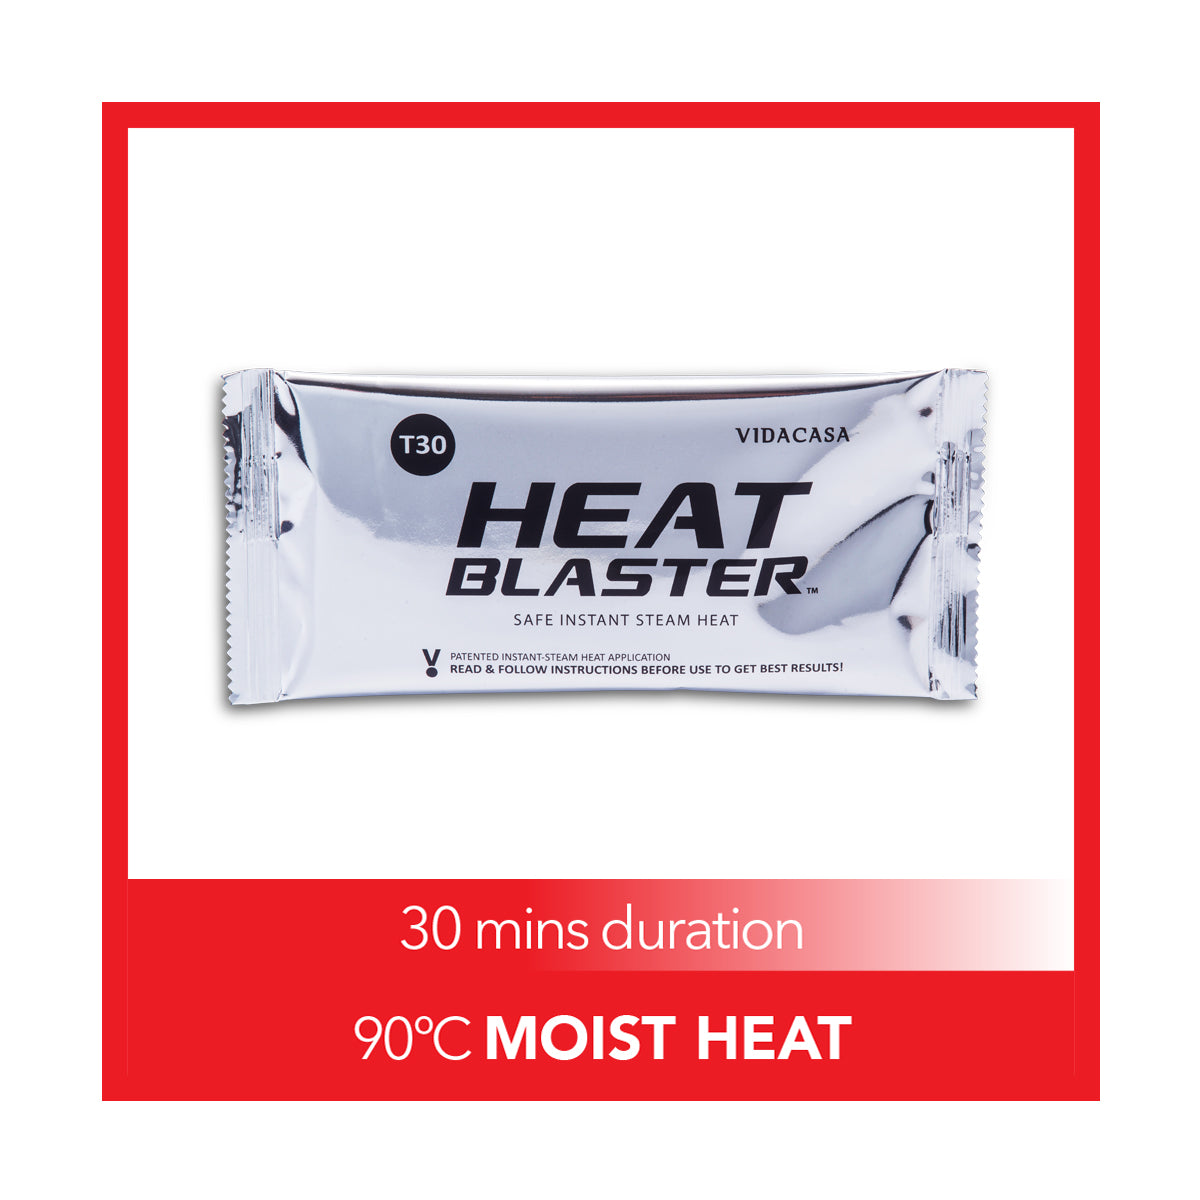 Heat blaster